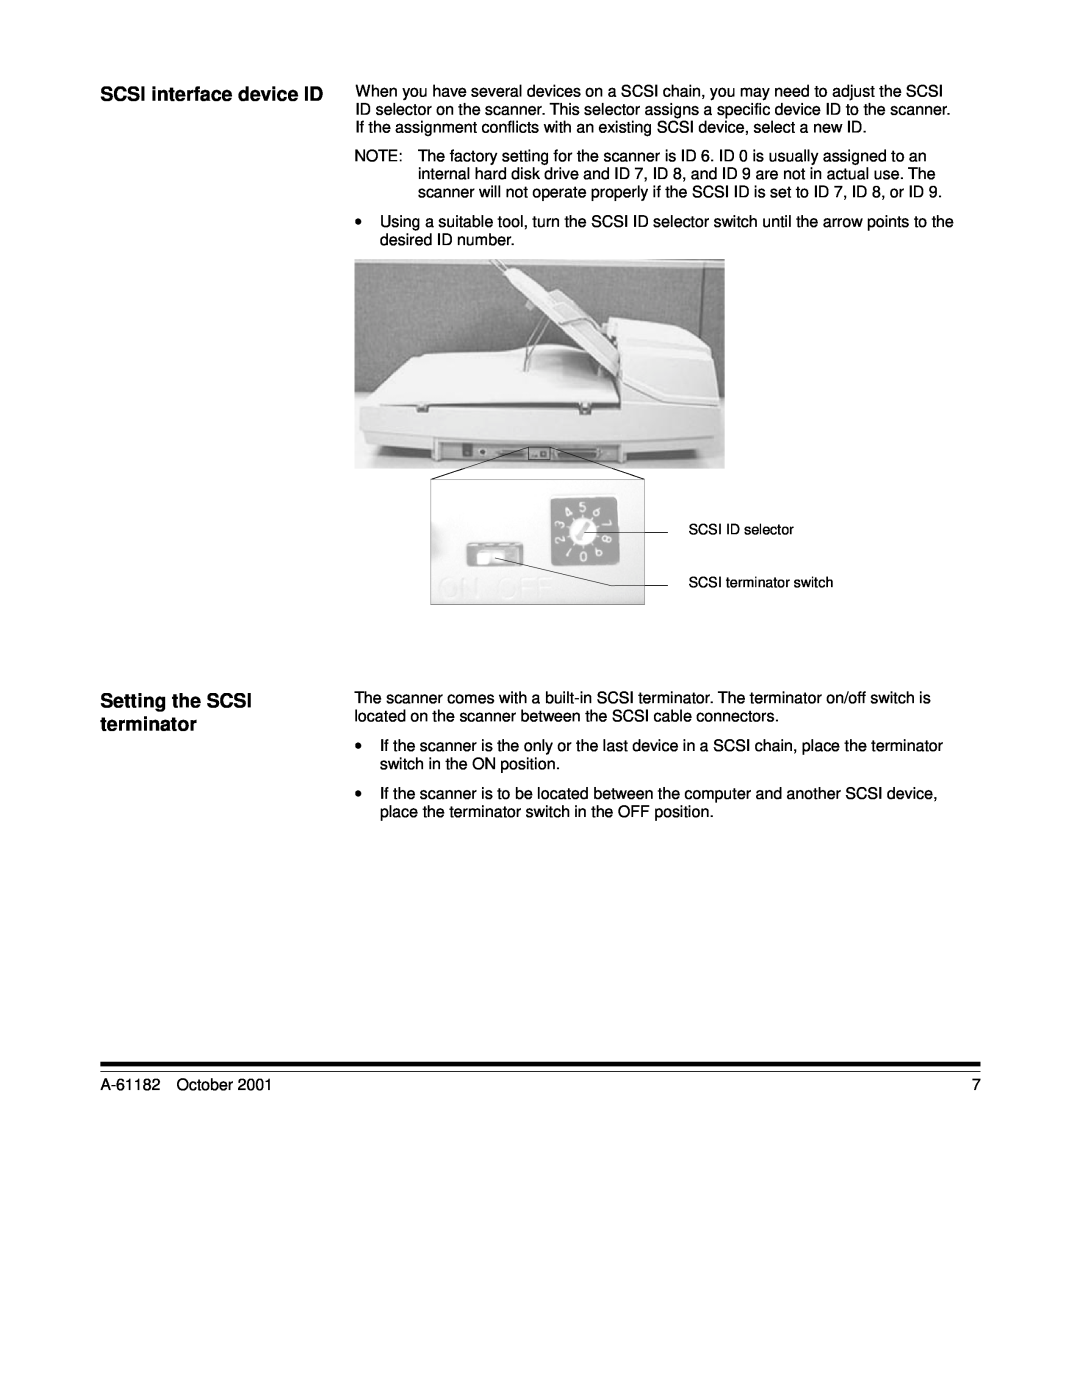 Kodak i60, i50 manual SCSI interface device ID, Setting the SCSI terminator, SCSI ID selector SCSI terminator switch 